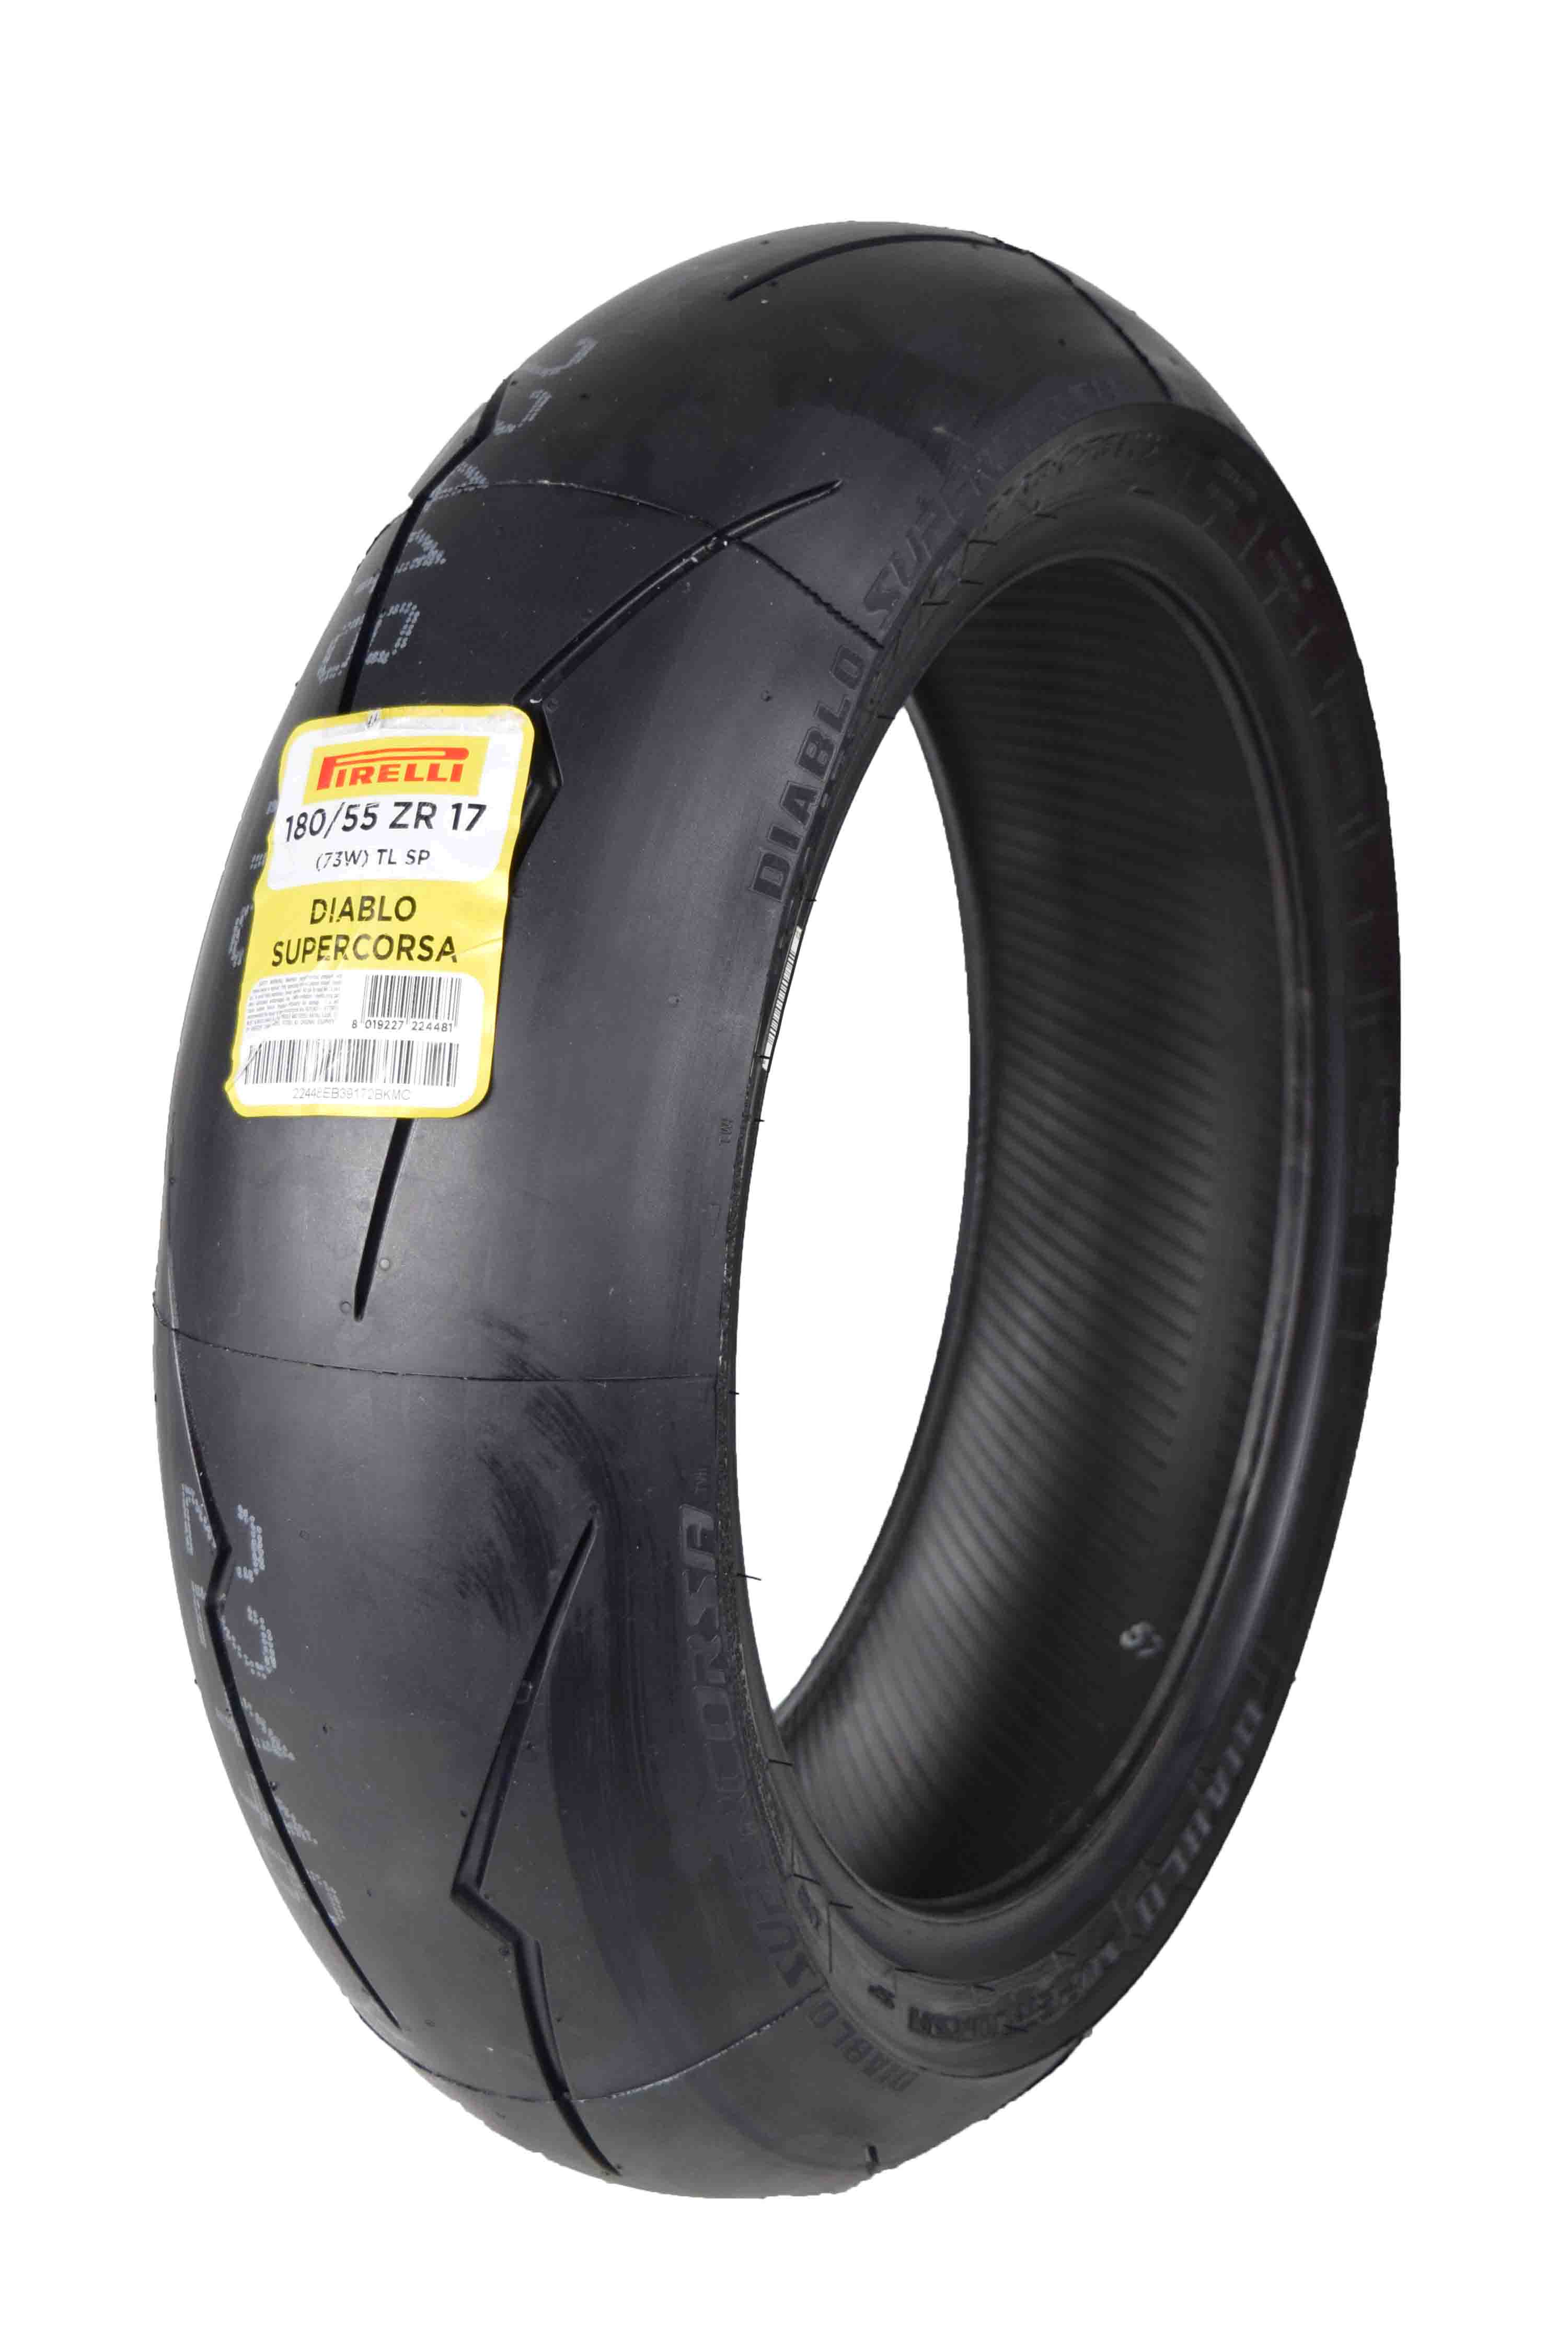 Pirelli-Tire-180-55ZR17-SUPER-CORSA-V2-Radial-Motorcycle-Rear-Tire-180-55-17-image-1